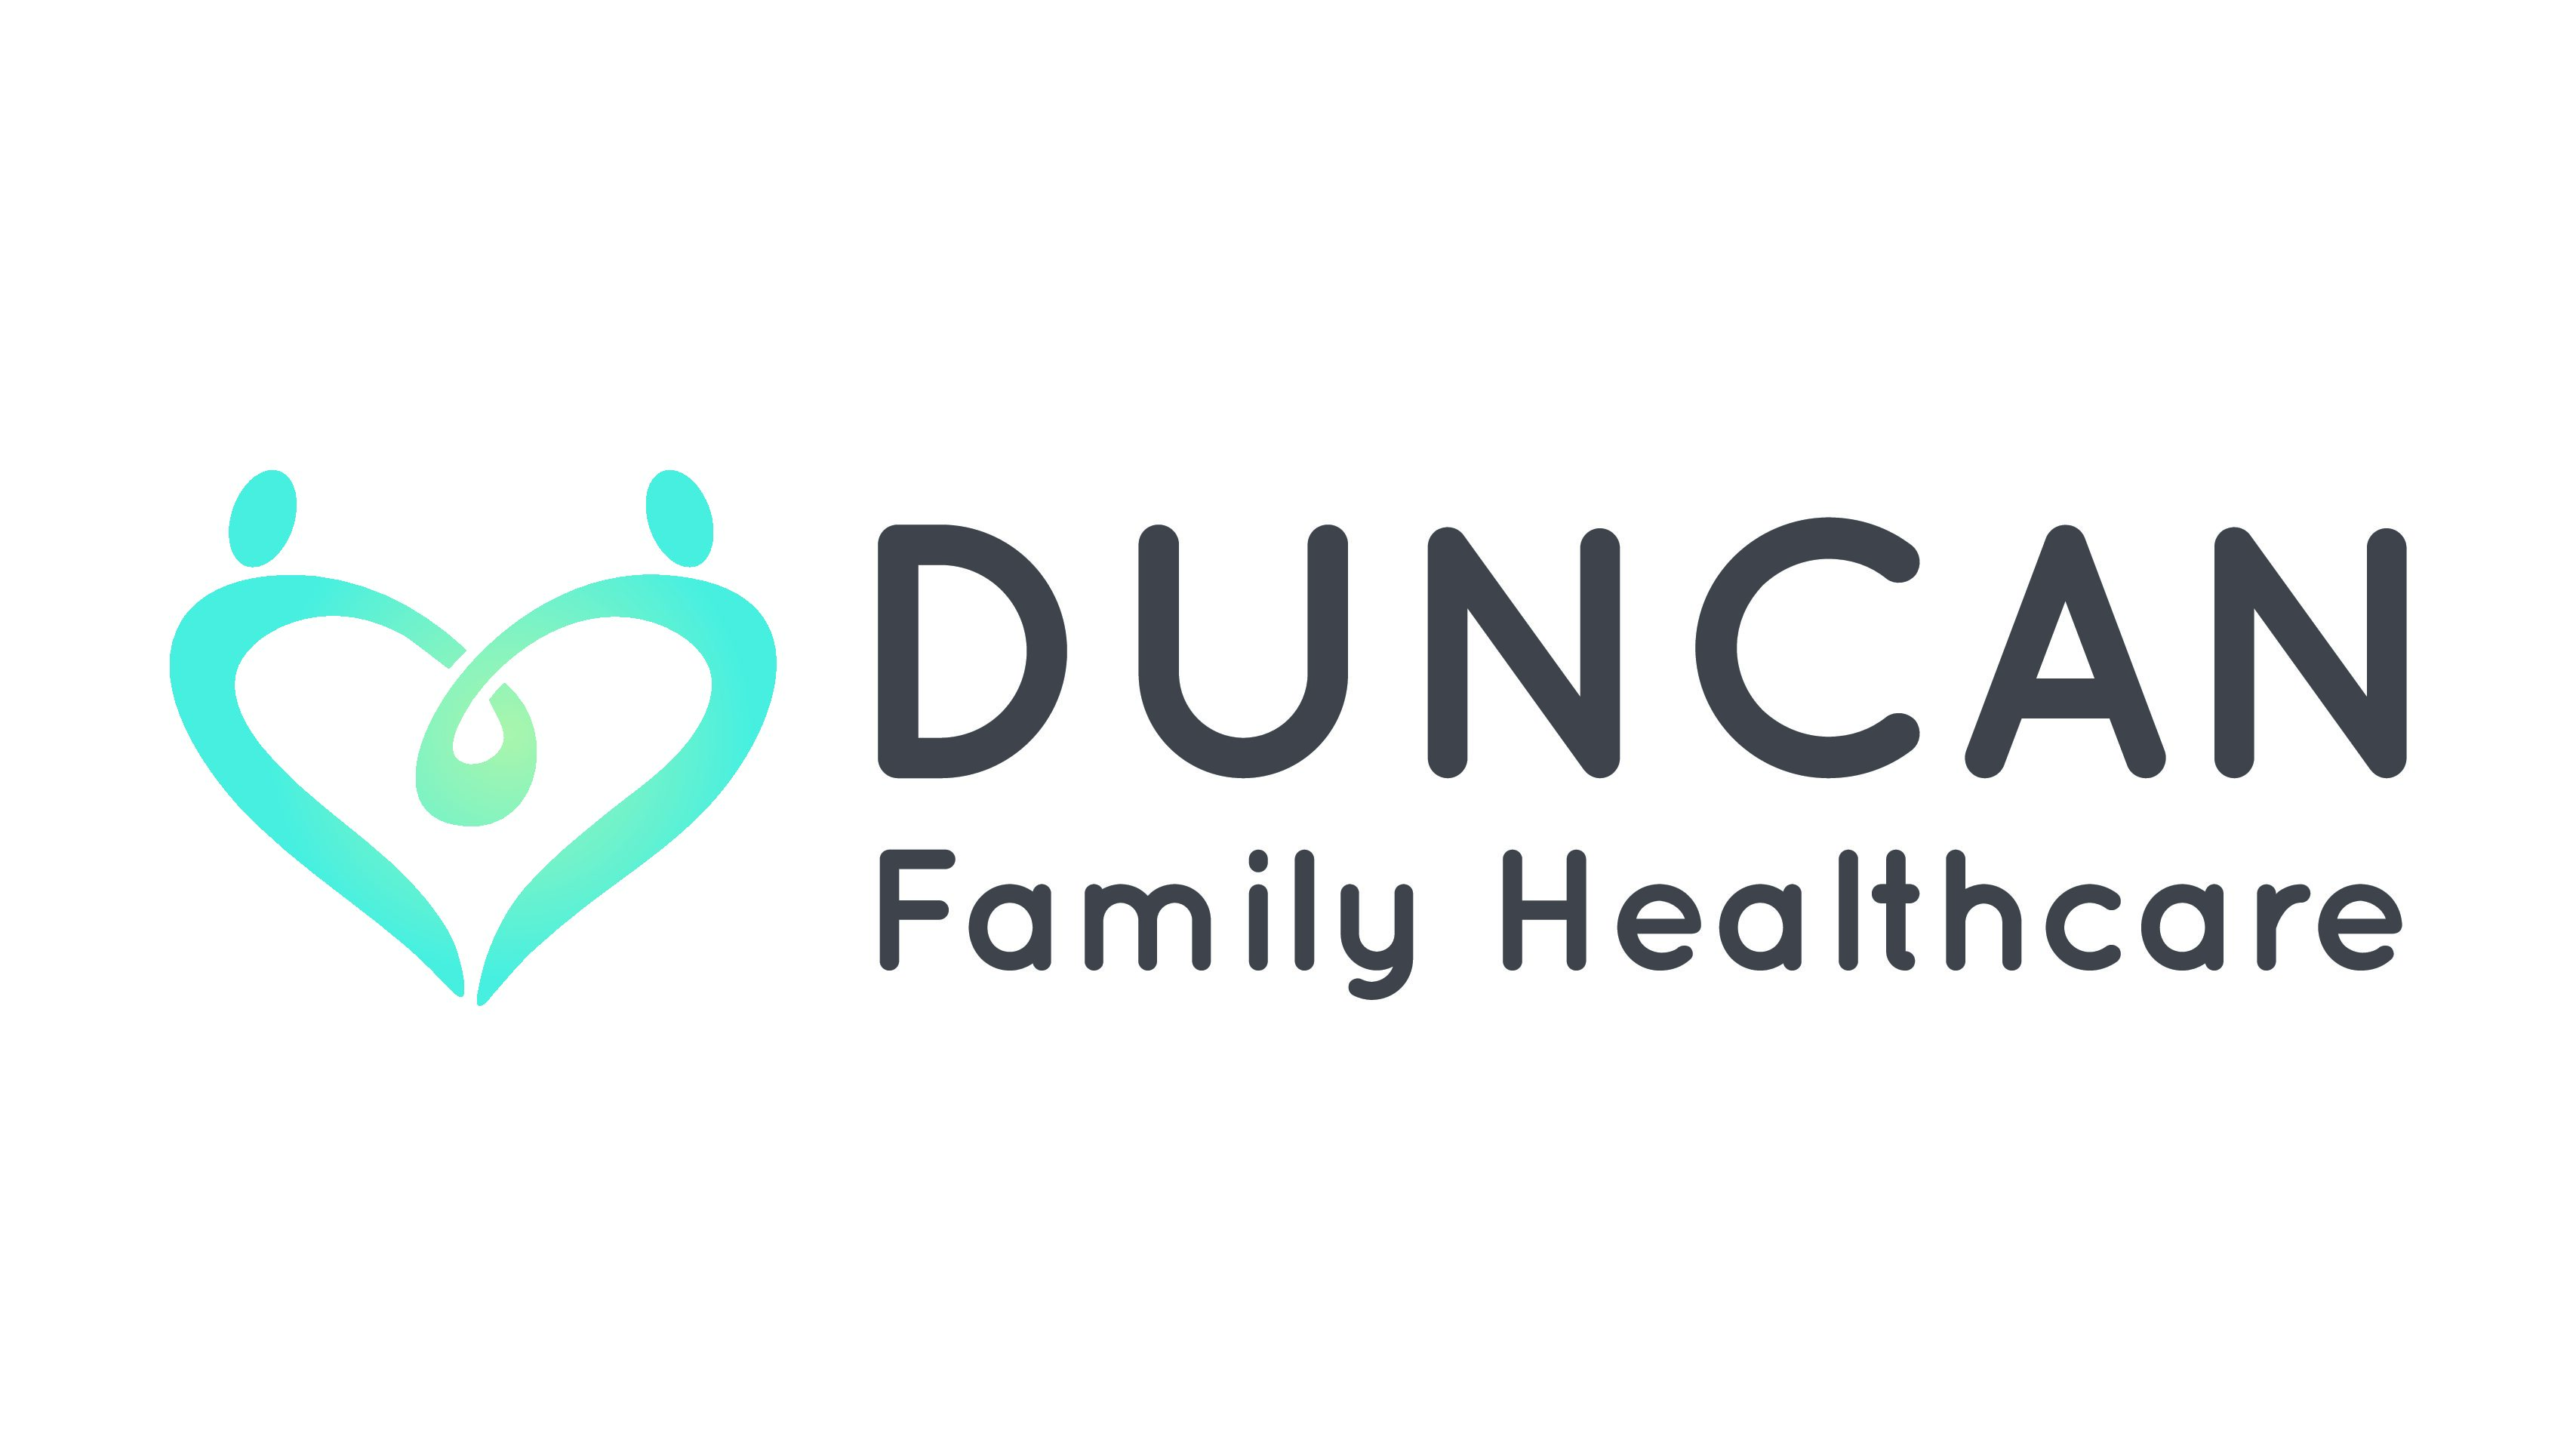 Duncan Family Healthcare